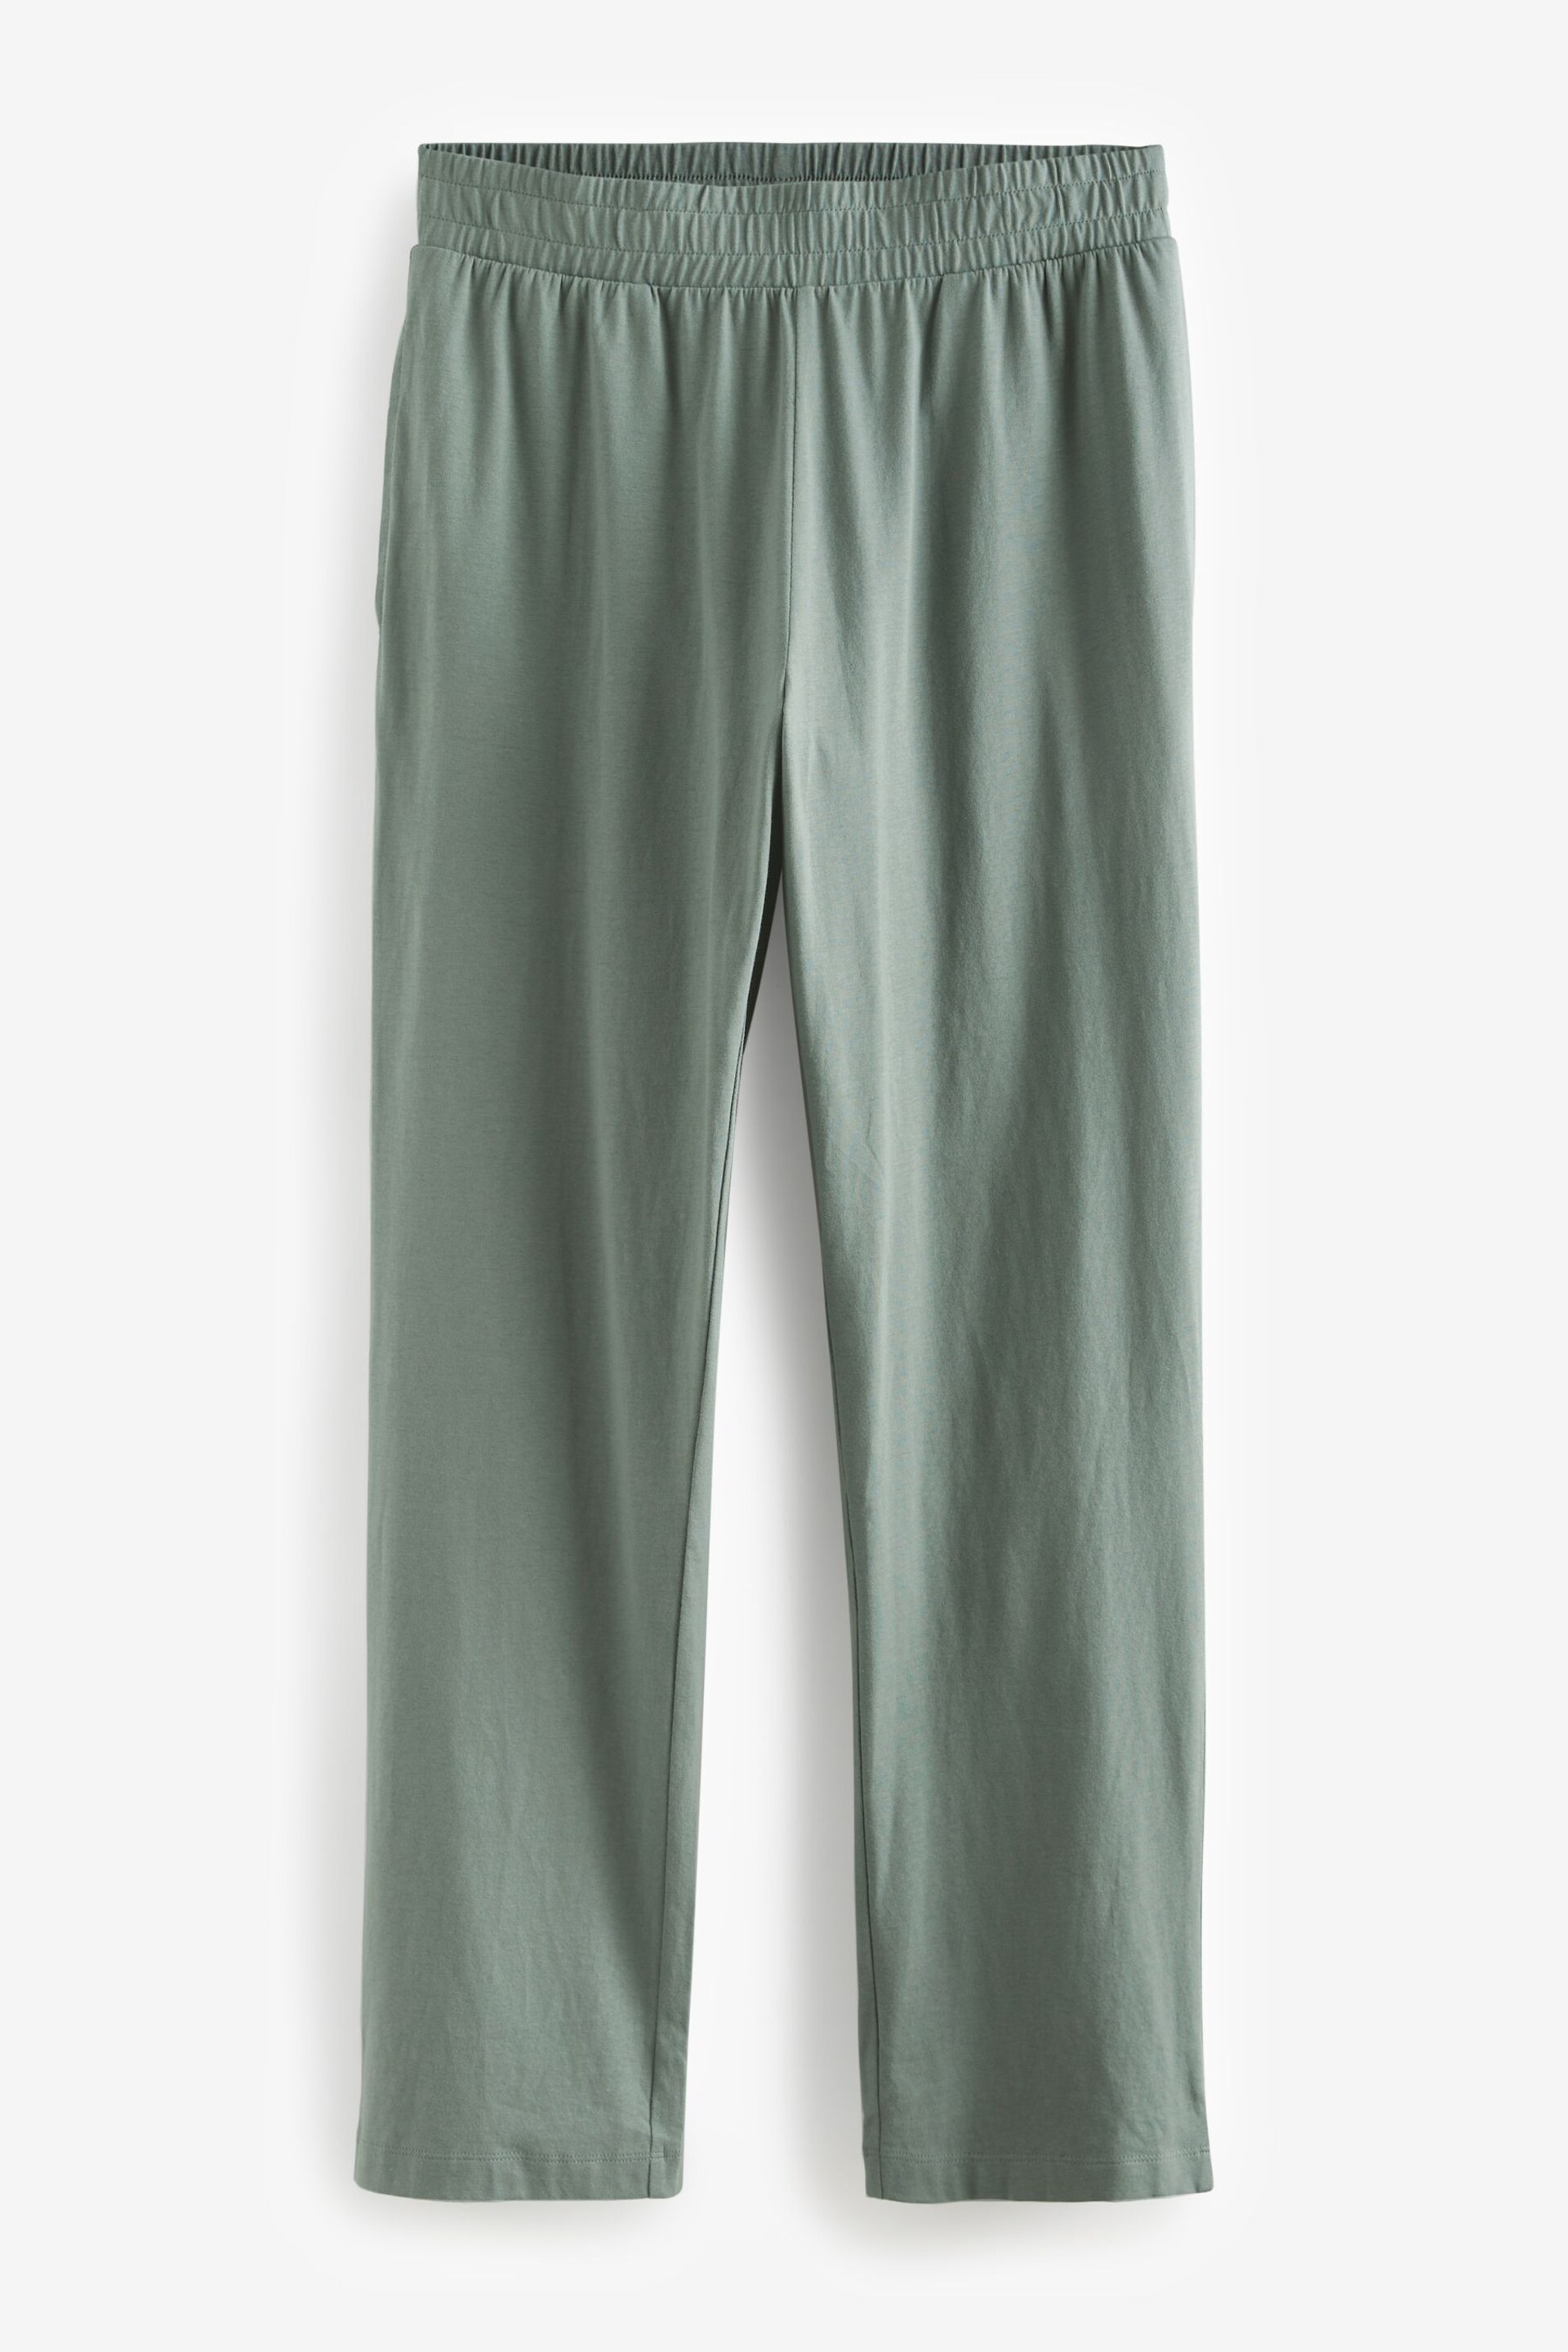 Grey/Sage Green Short Sleeve Jersey Pyjamas Set - Image 11 of 14